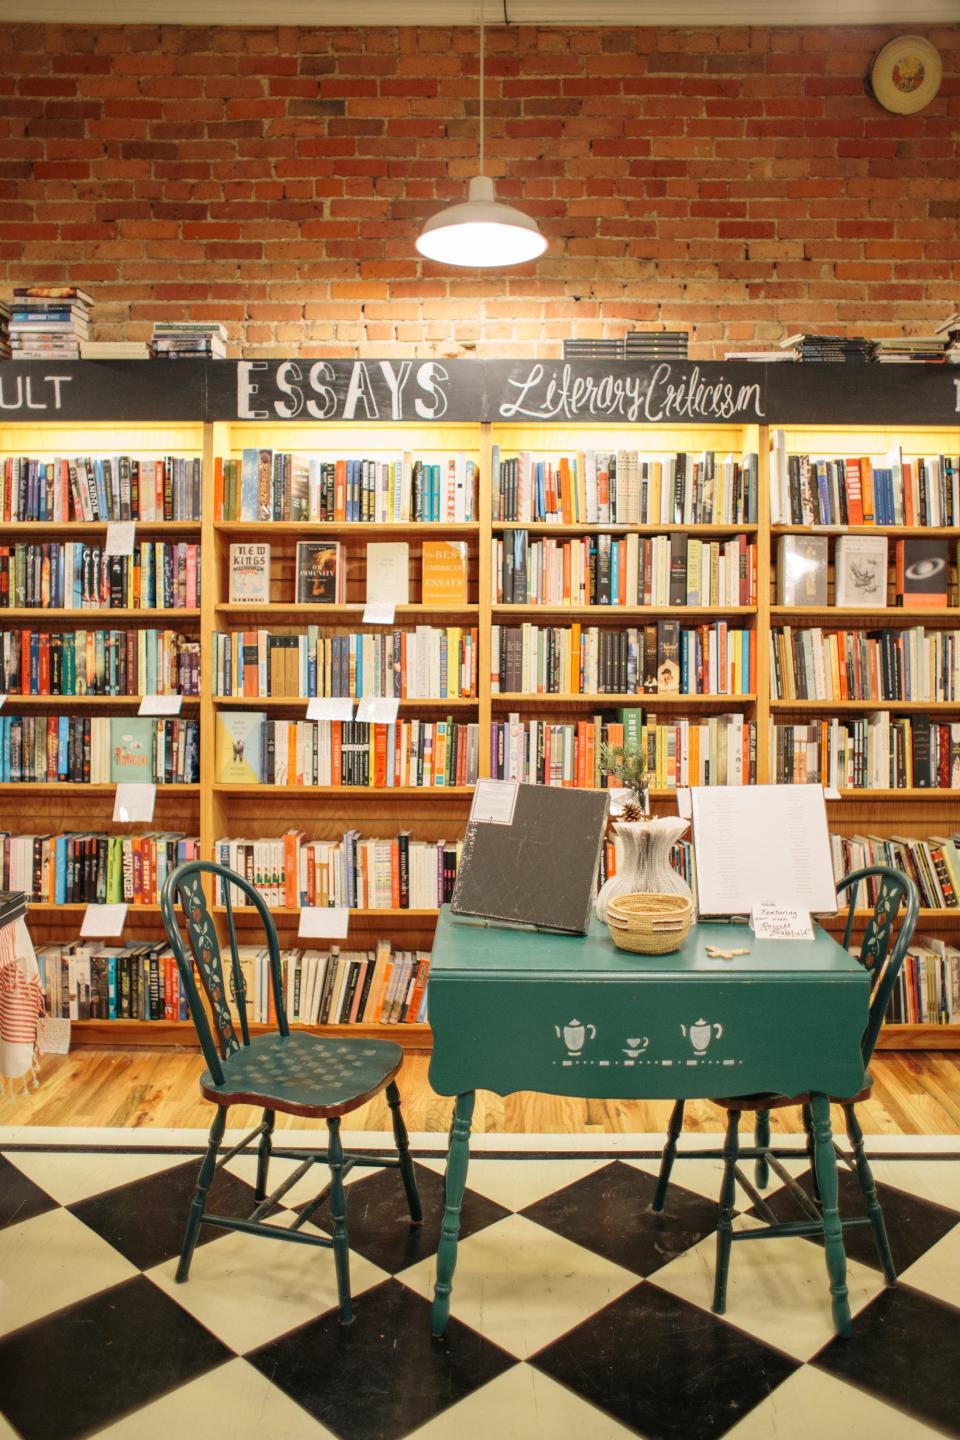 As a college town, Ann Arbor has no shortage of bookstores.